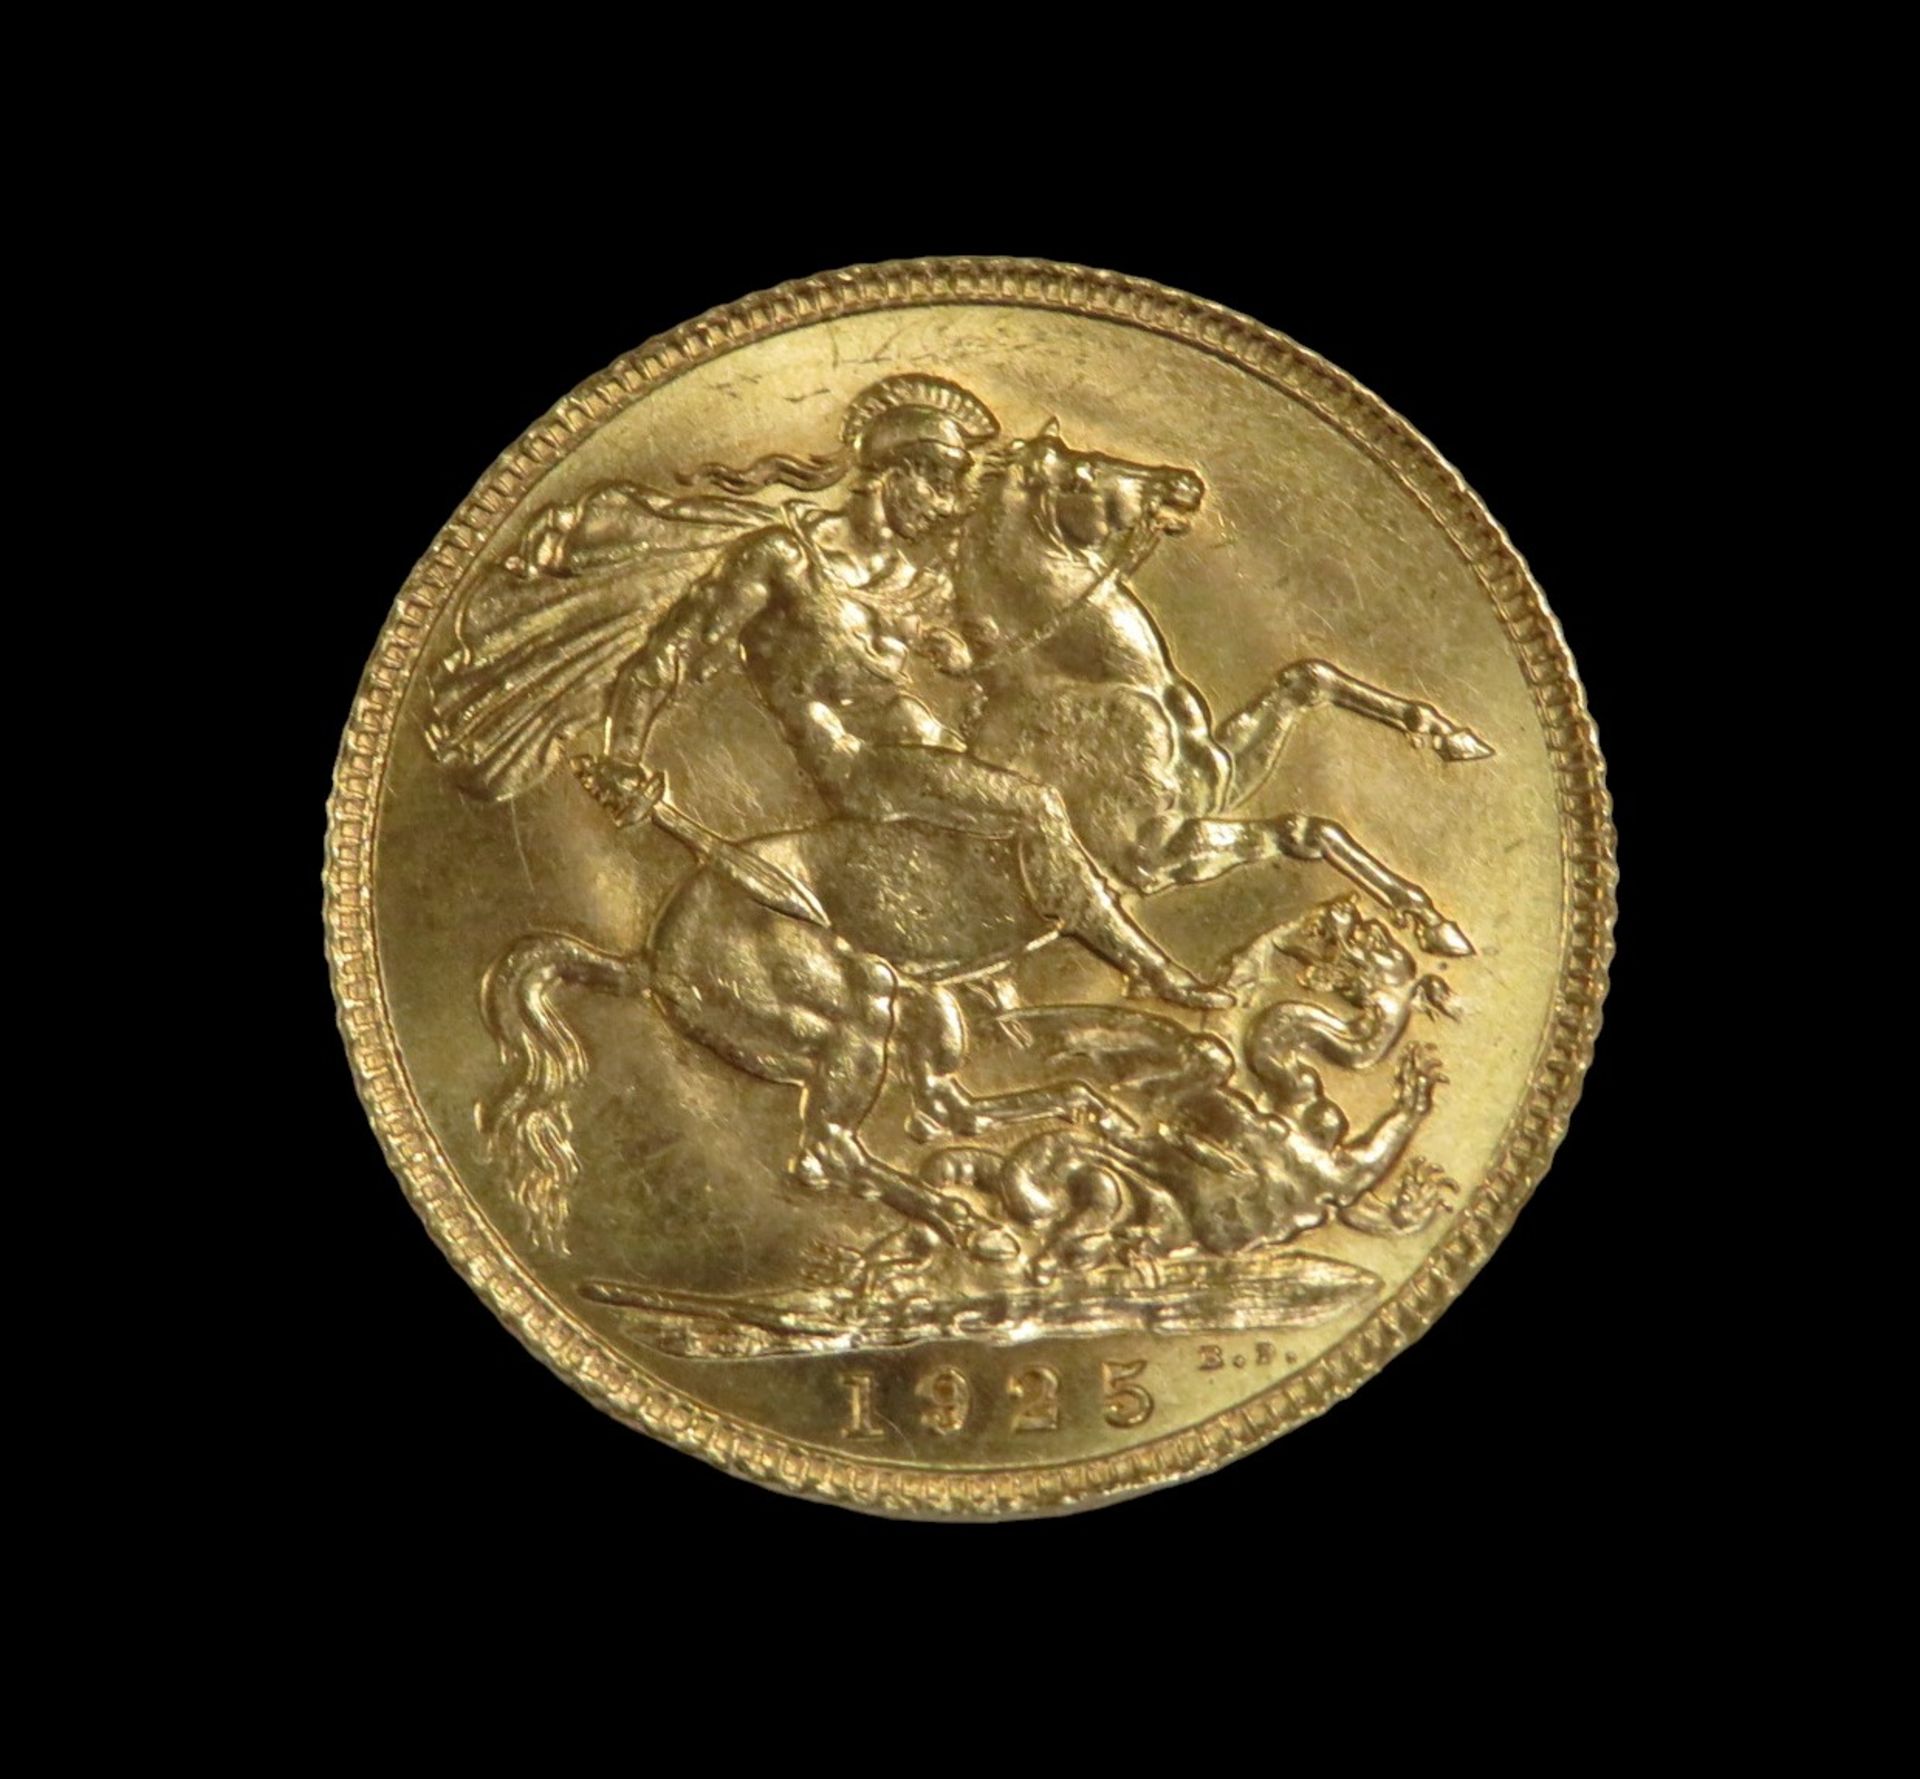 Goldmünze, 1 Pfund, Sovereign, George, 1925, Gold 916/000, 7,99 g, d 2,2 cm. - Image 2 of 2